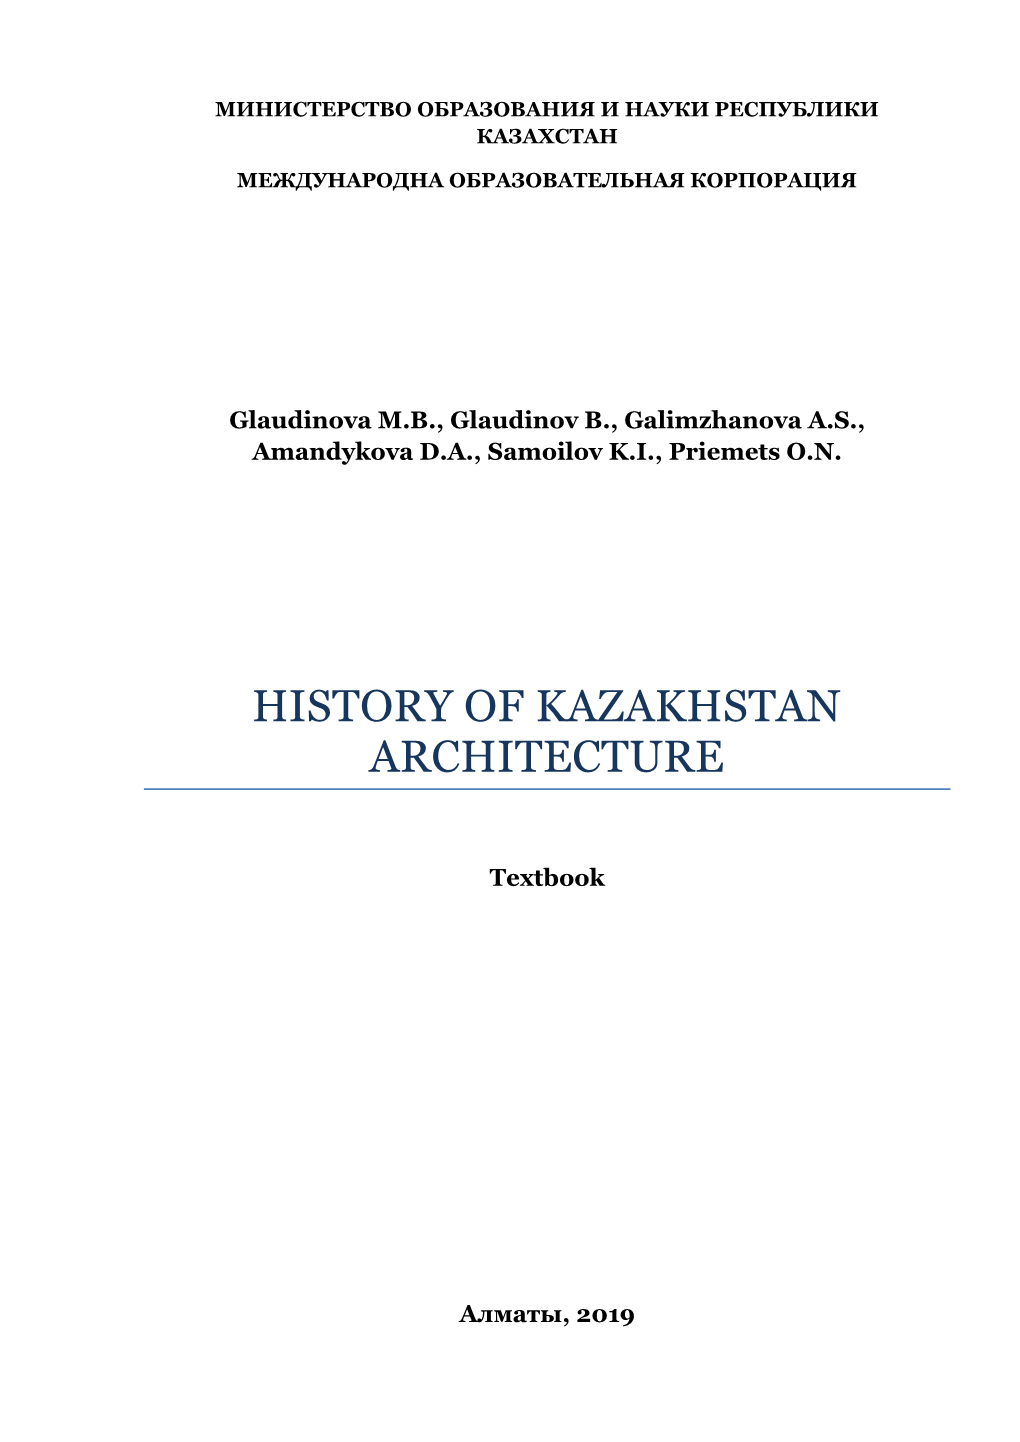 History of Kazakhstan Architecture